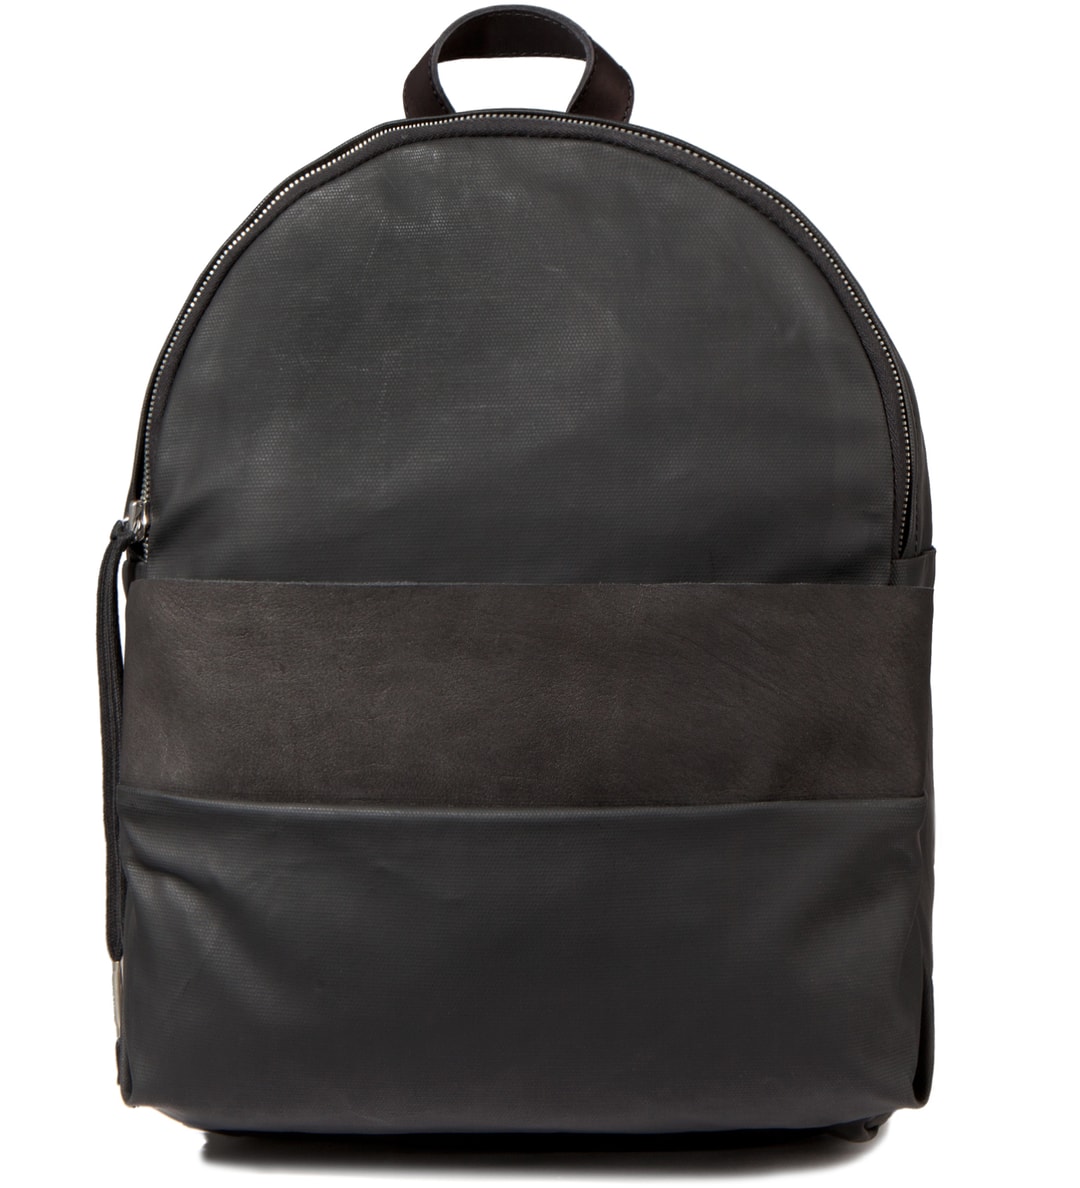 SILENT DAMIR DOMA - Black Bango Backpack | HBX - Globally Curated ...